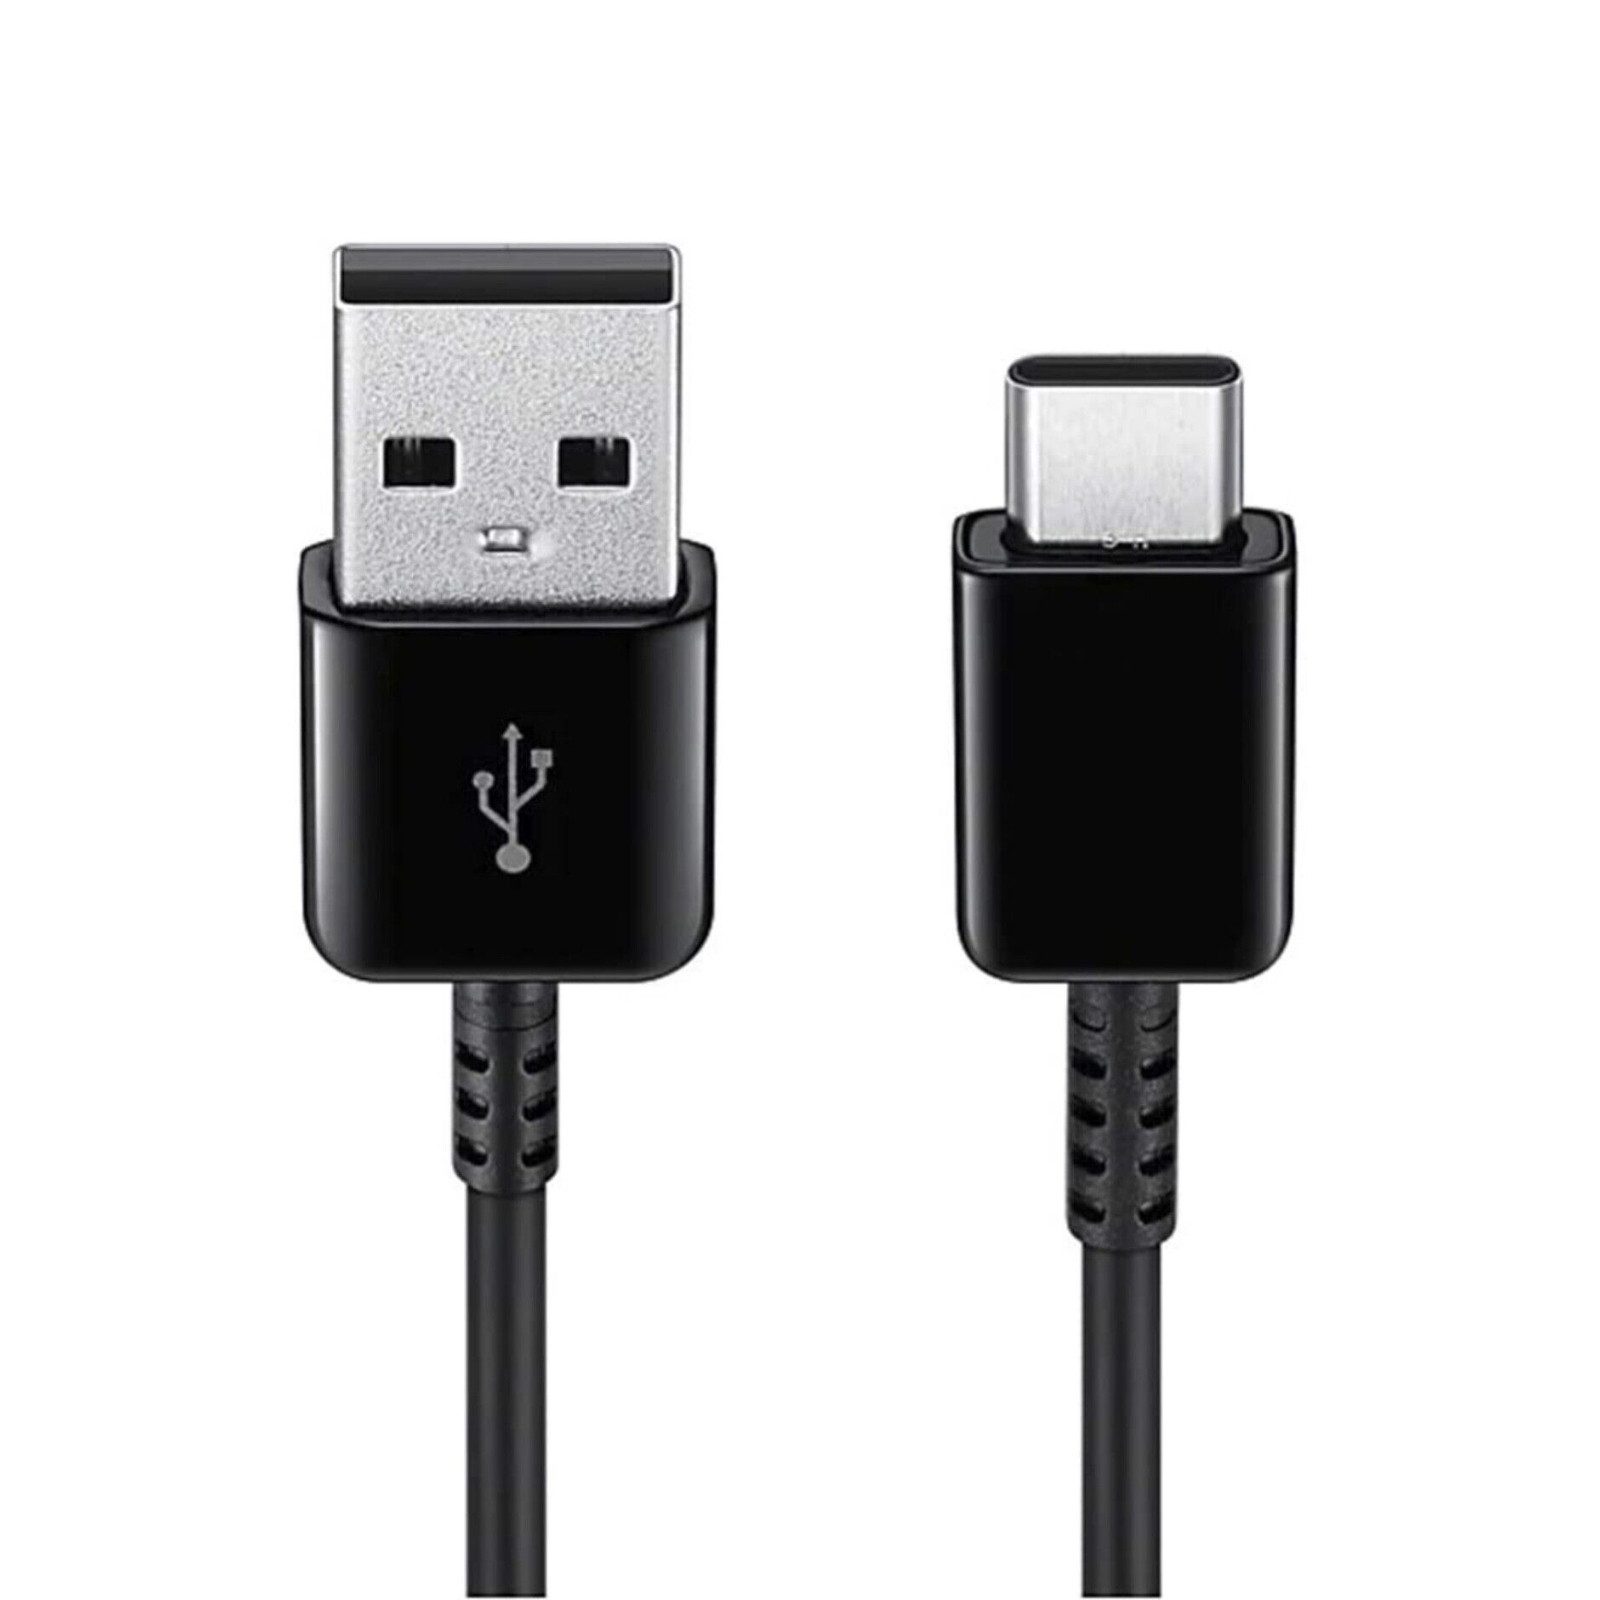 IK-Handelsgruppe EP-DG950CBE Schnellladekabel für Samsung Smartphone-Kabel, USB-C, USB Typ A (120 cm)